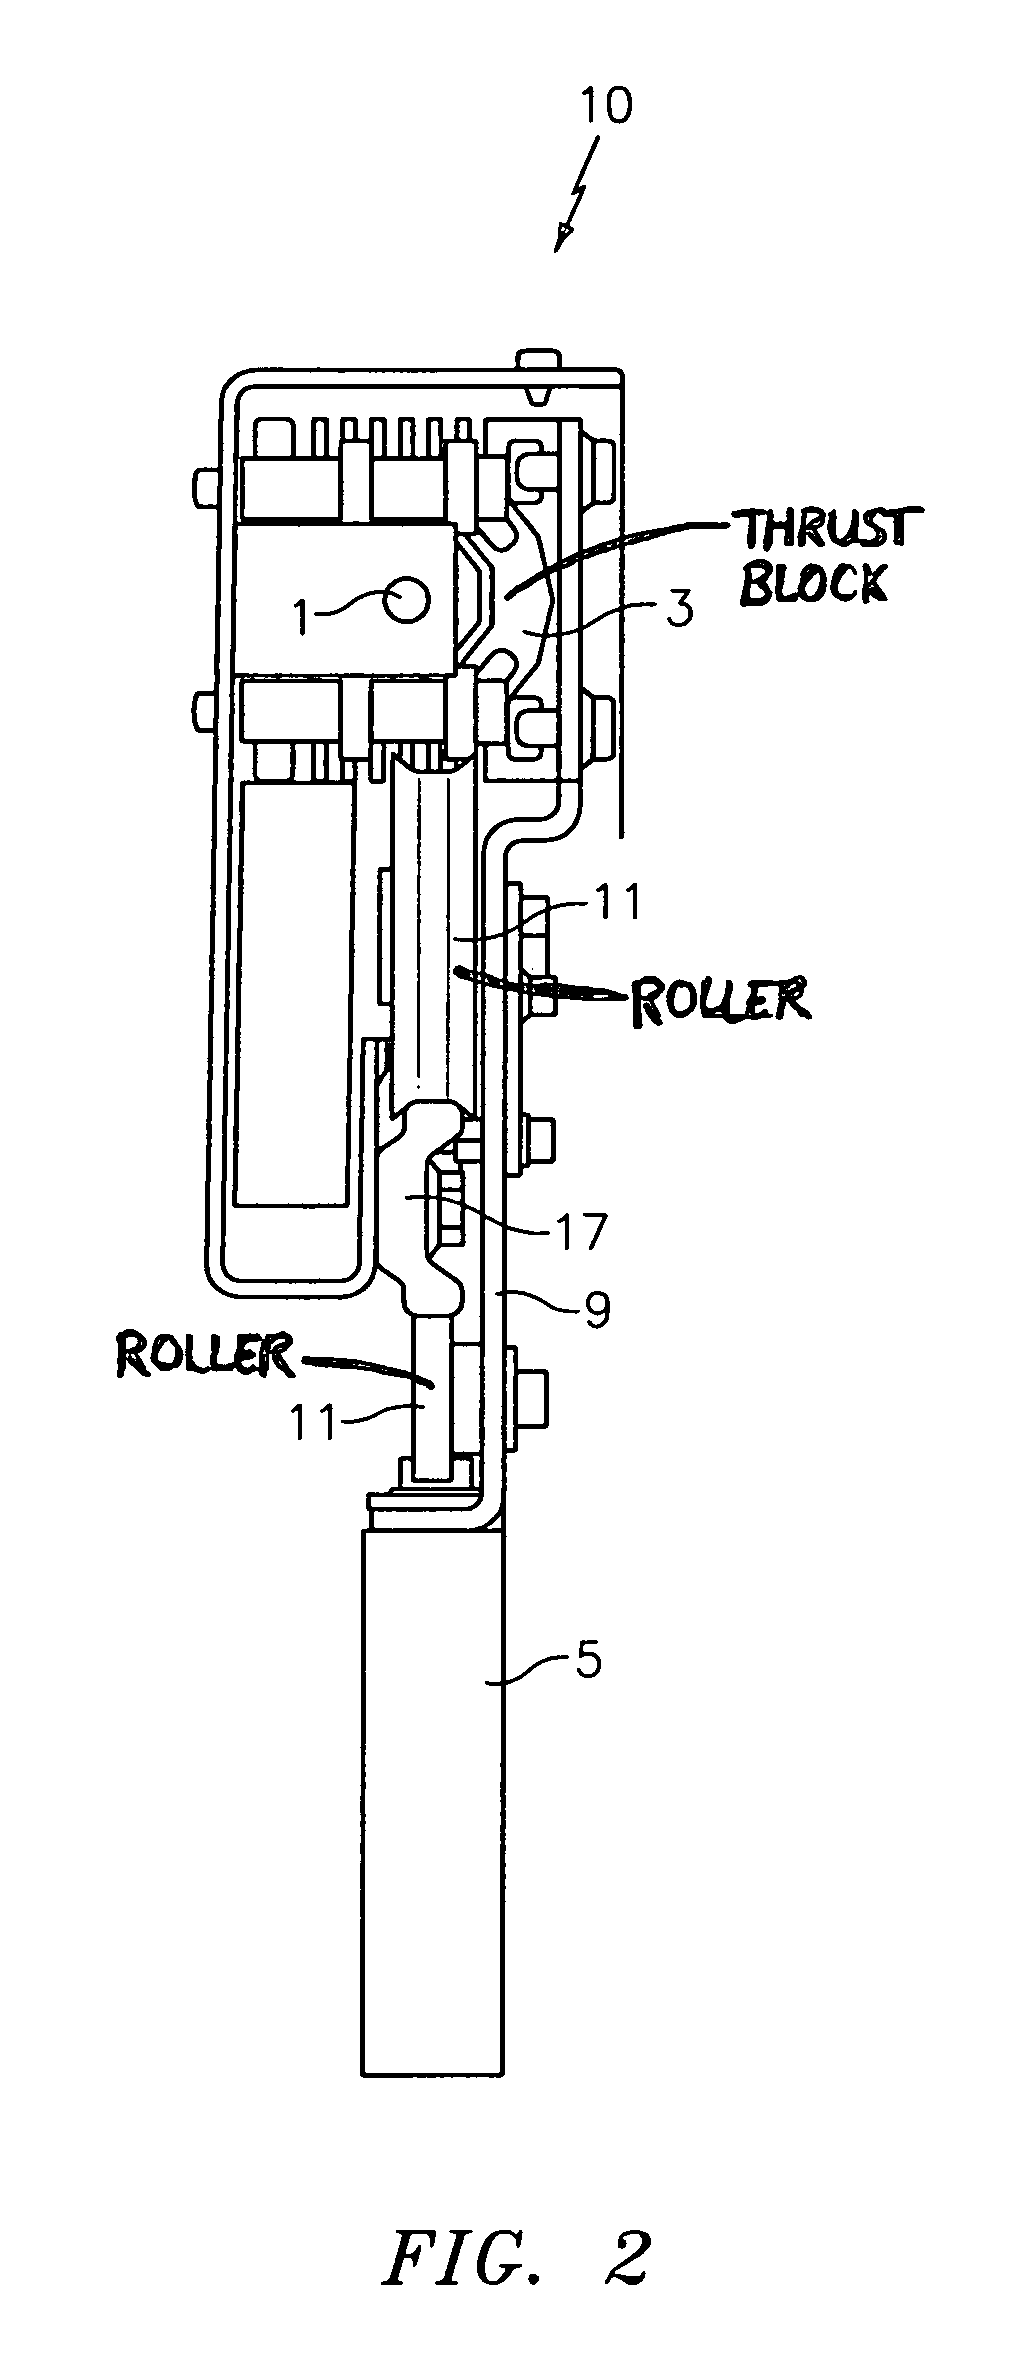 Tubular linear synchronous motor control for elevator doors